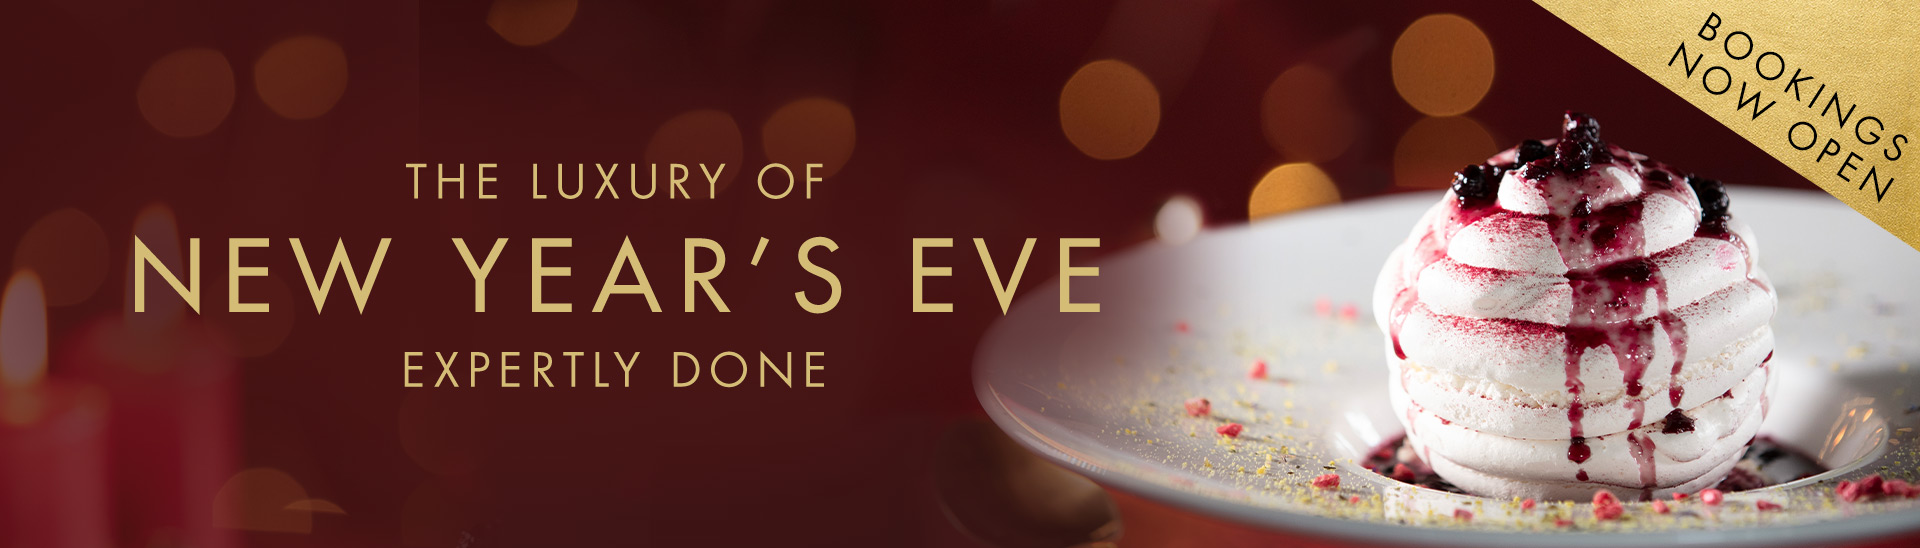 New Year’s Eve Menu at Miller & Carter CribbsCauseway • Book Now